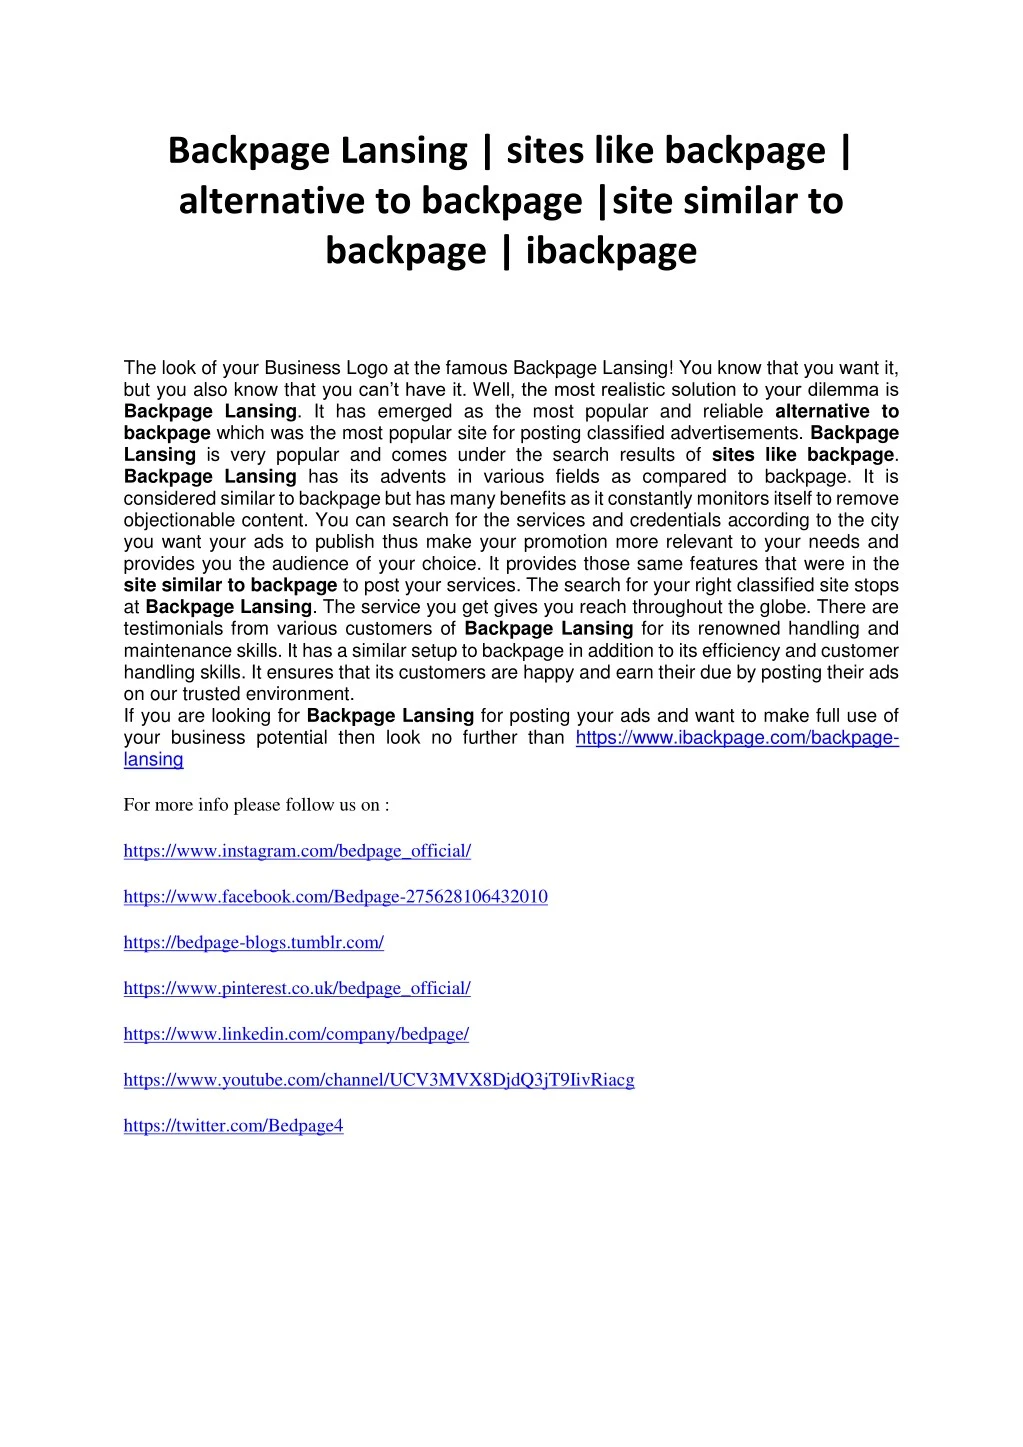 backpage lansing sites like backpage alternative